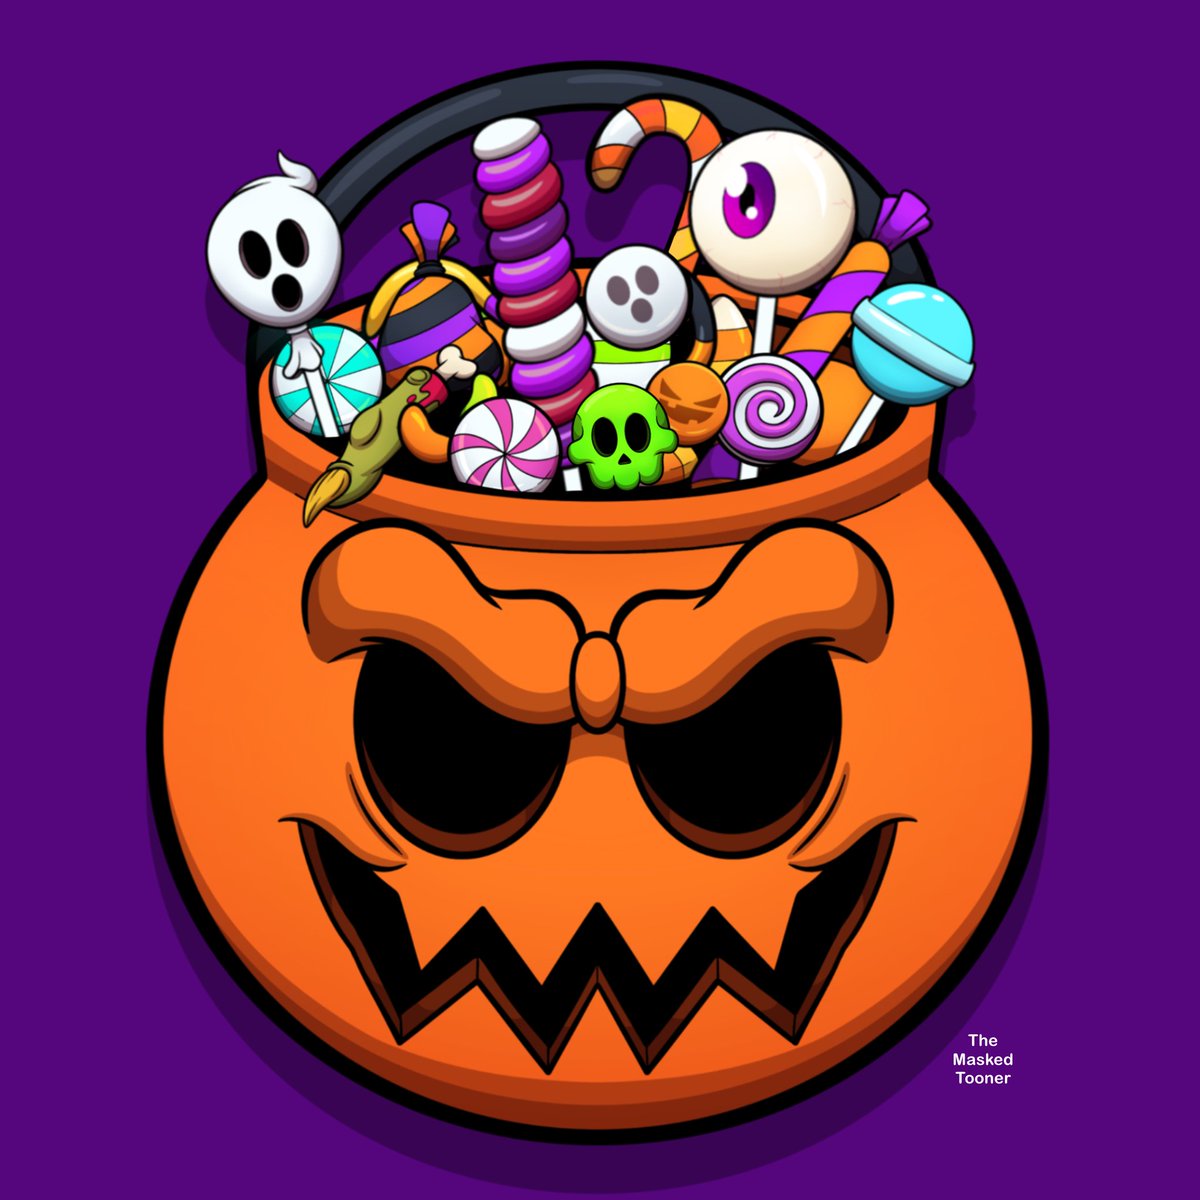 Halloween candy! 🎃🍬
-
#halloween #candy #halloweencandy #lollipop #sugar #candycorn #eyeball #pumpkin #bucket #trickortreat #cartoon #cartooncandy #themaskedtooner #vector #vectorart #stockphoto #illustration #tshirtdesign #cartoontshirt #dutchartist